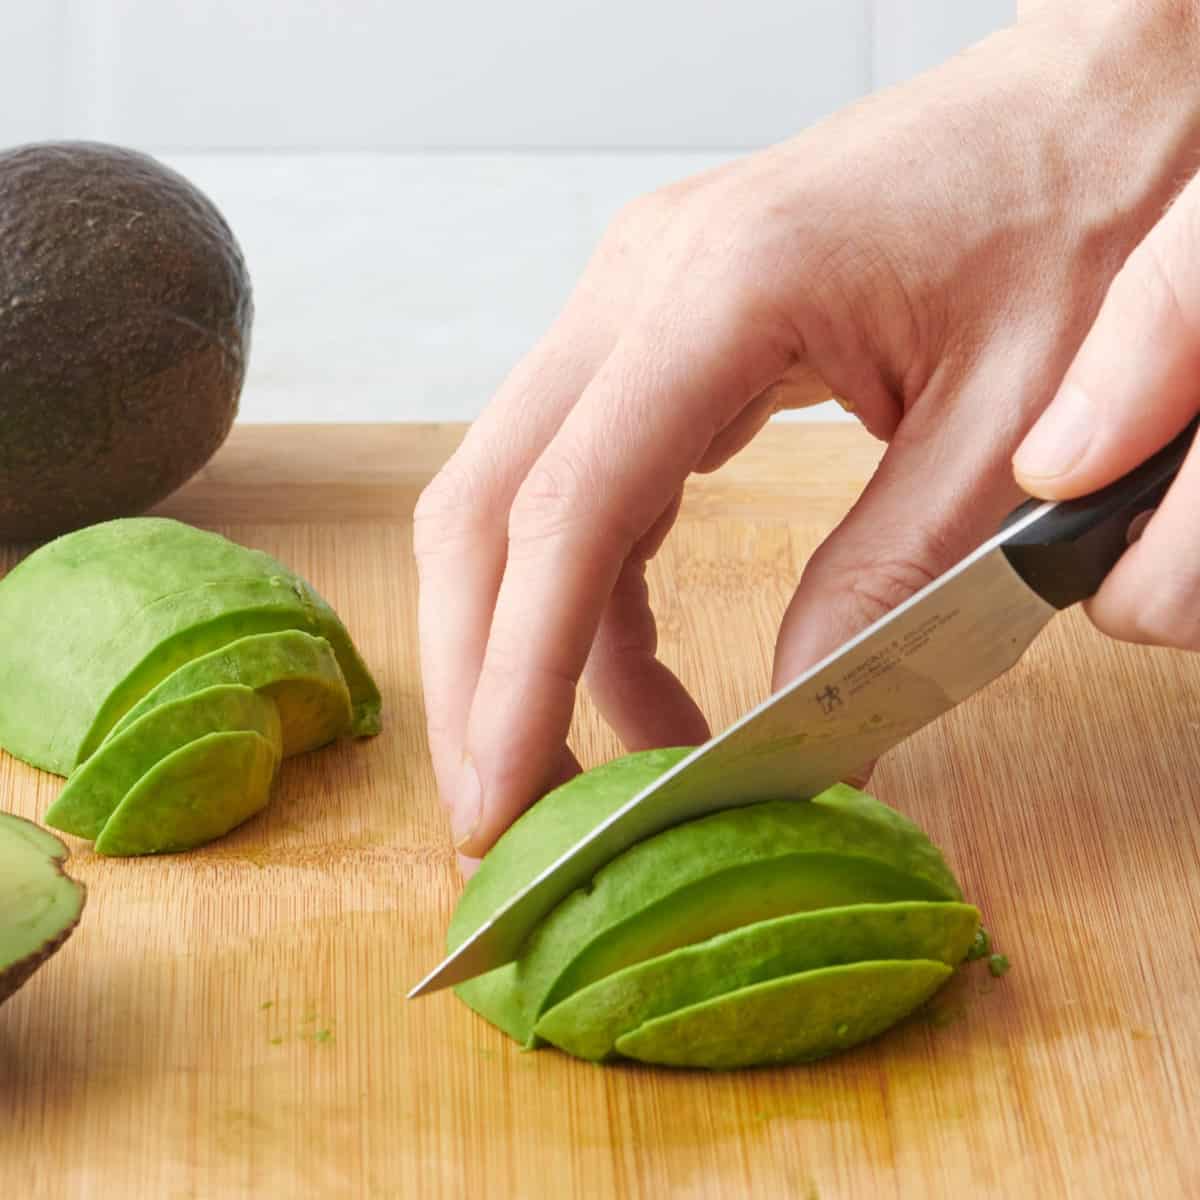 How to Cut an Avocado.